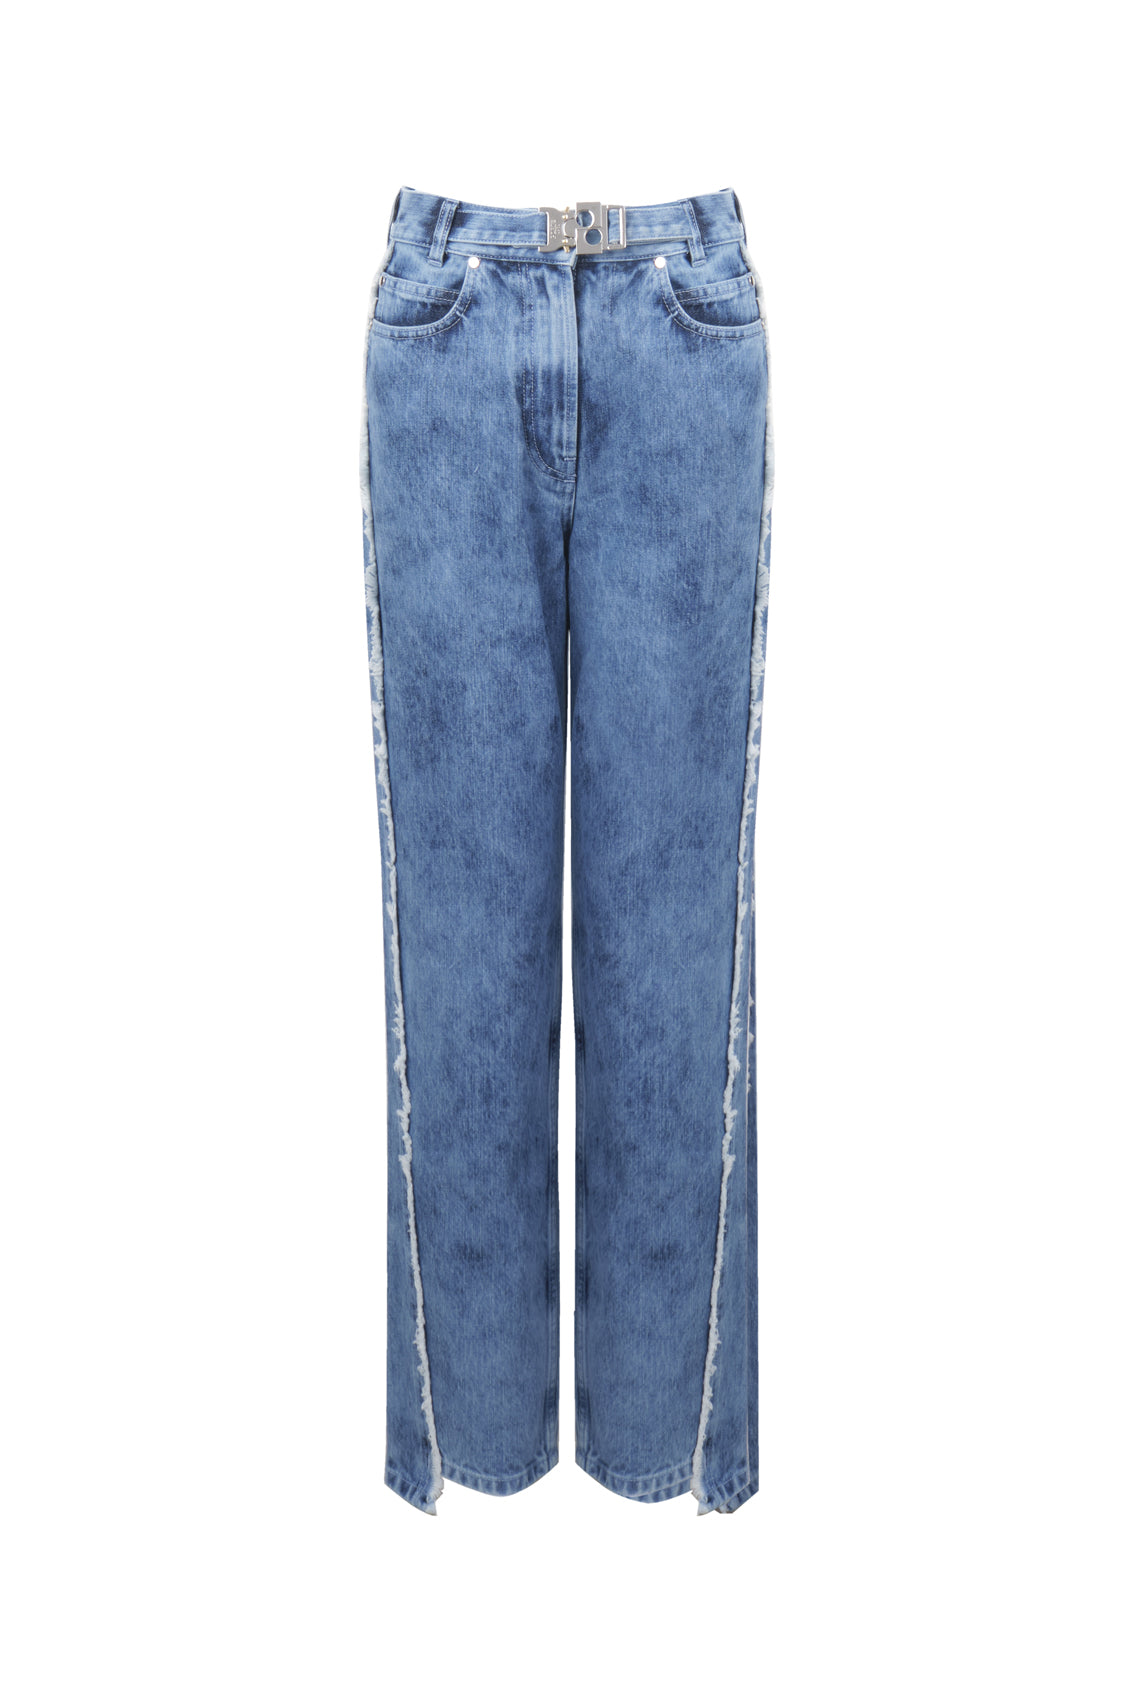 Denim Jacquard Jeans